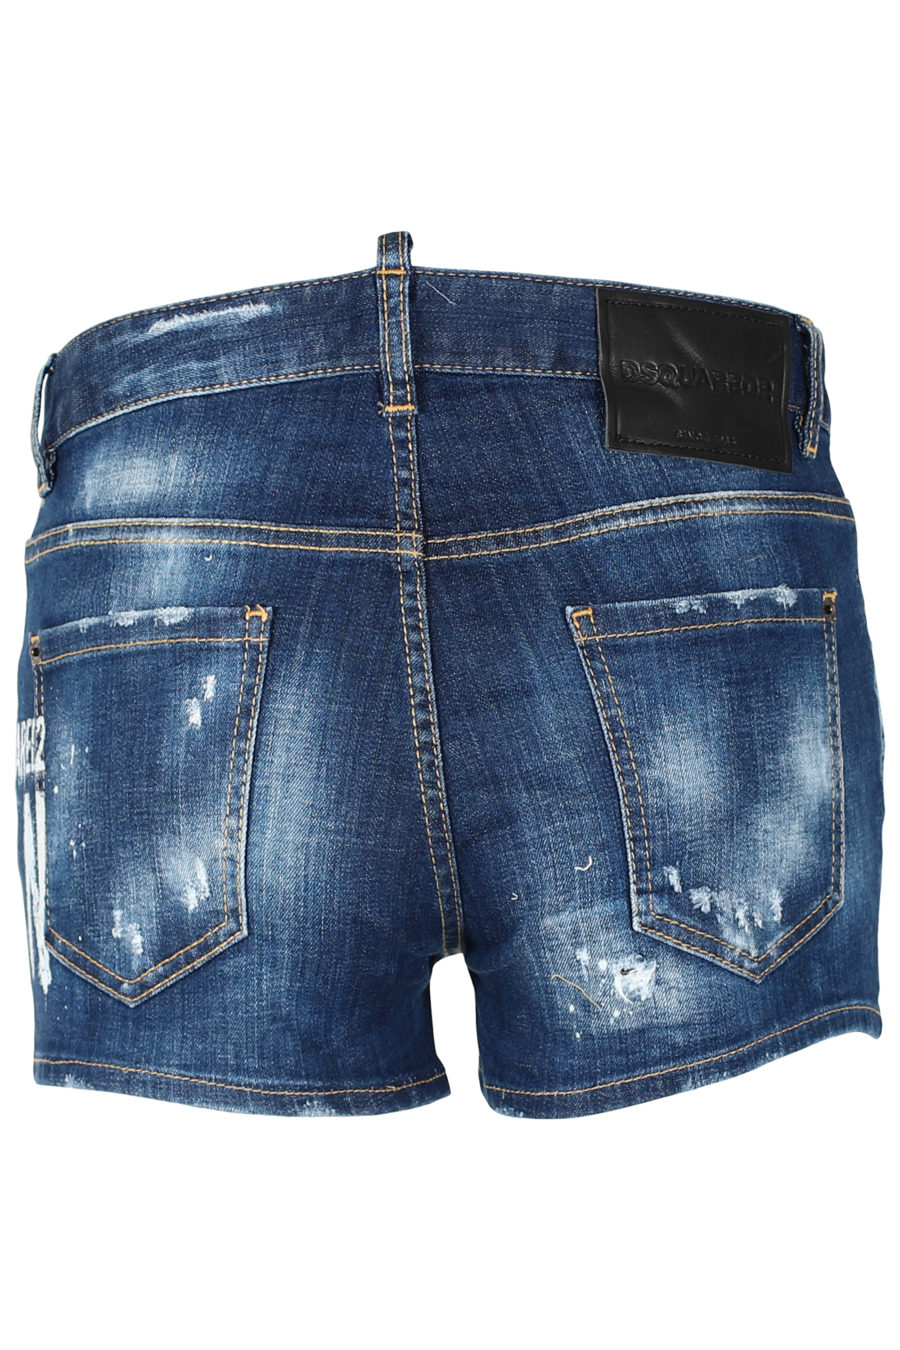 Denim shorts "Icon" - IMG 3233